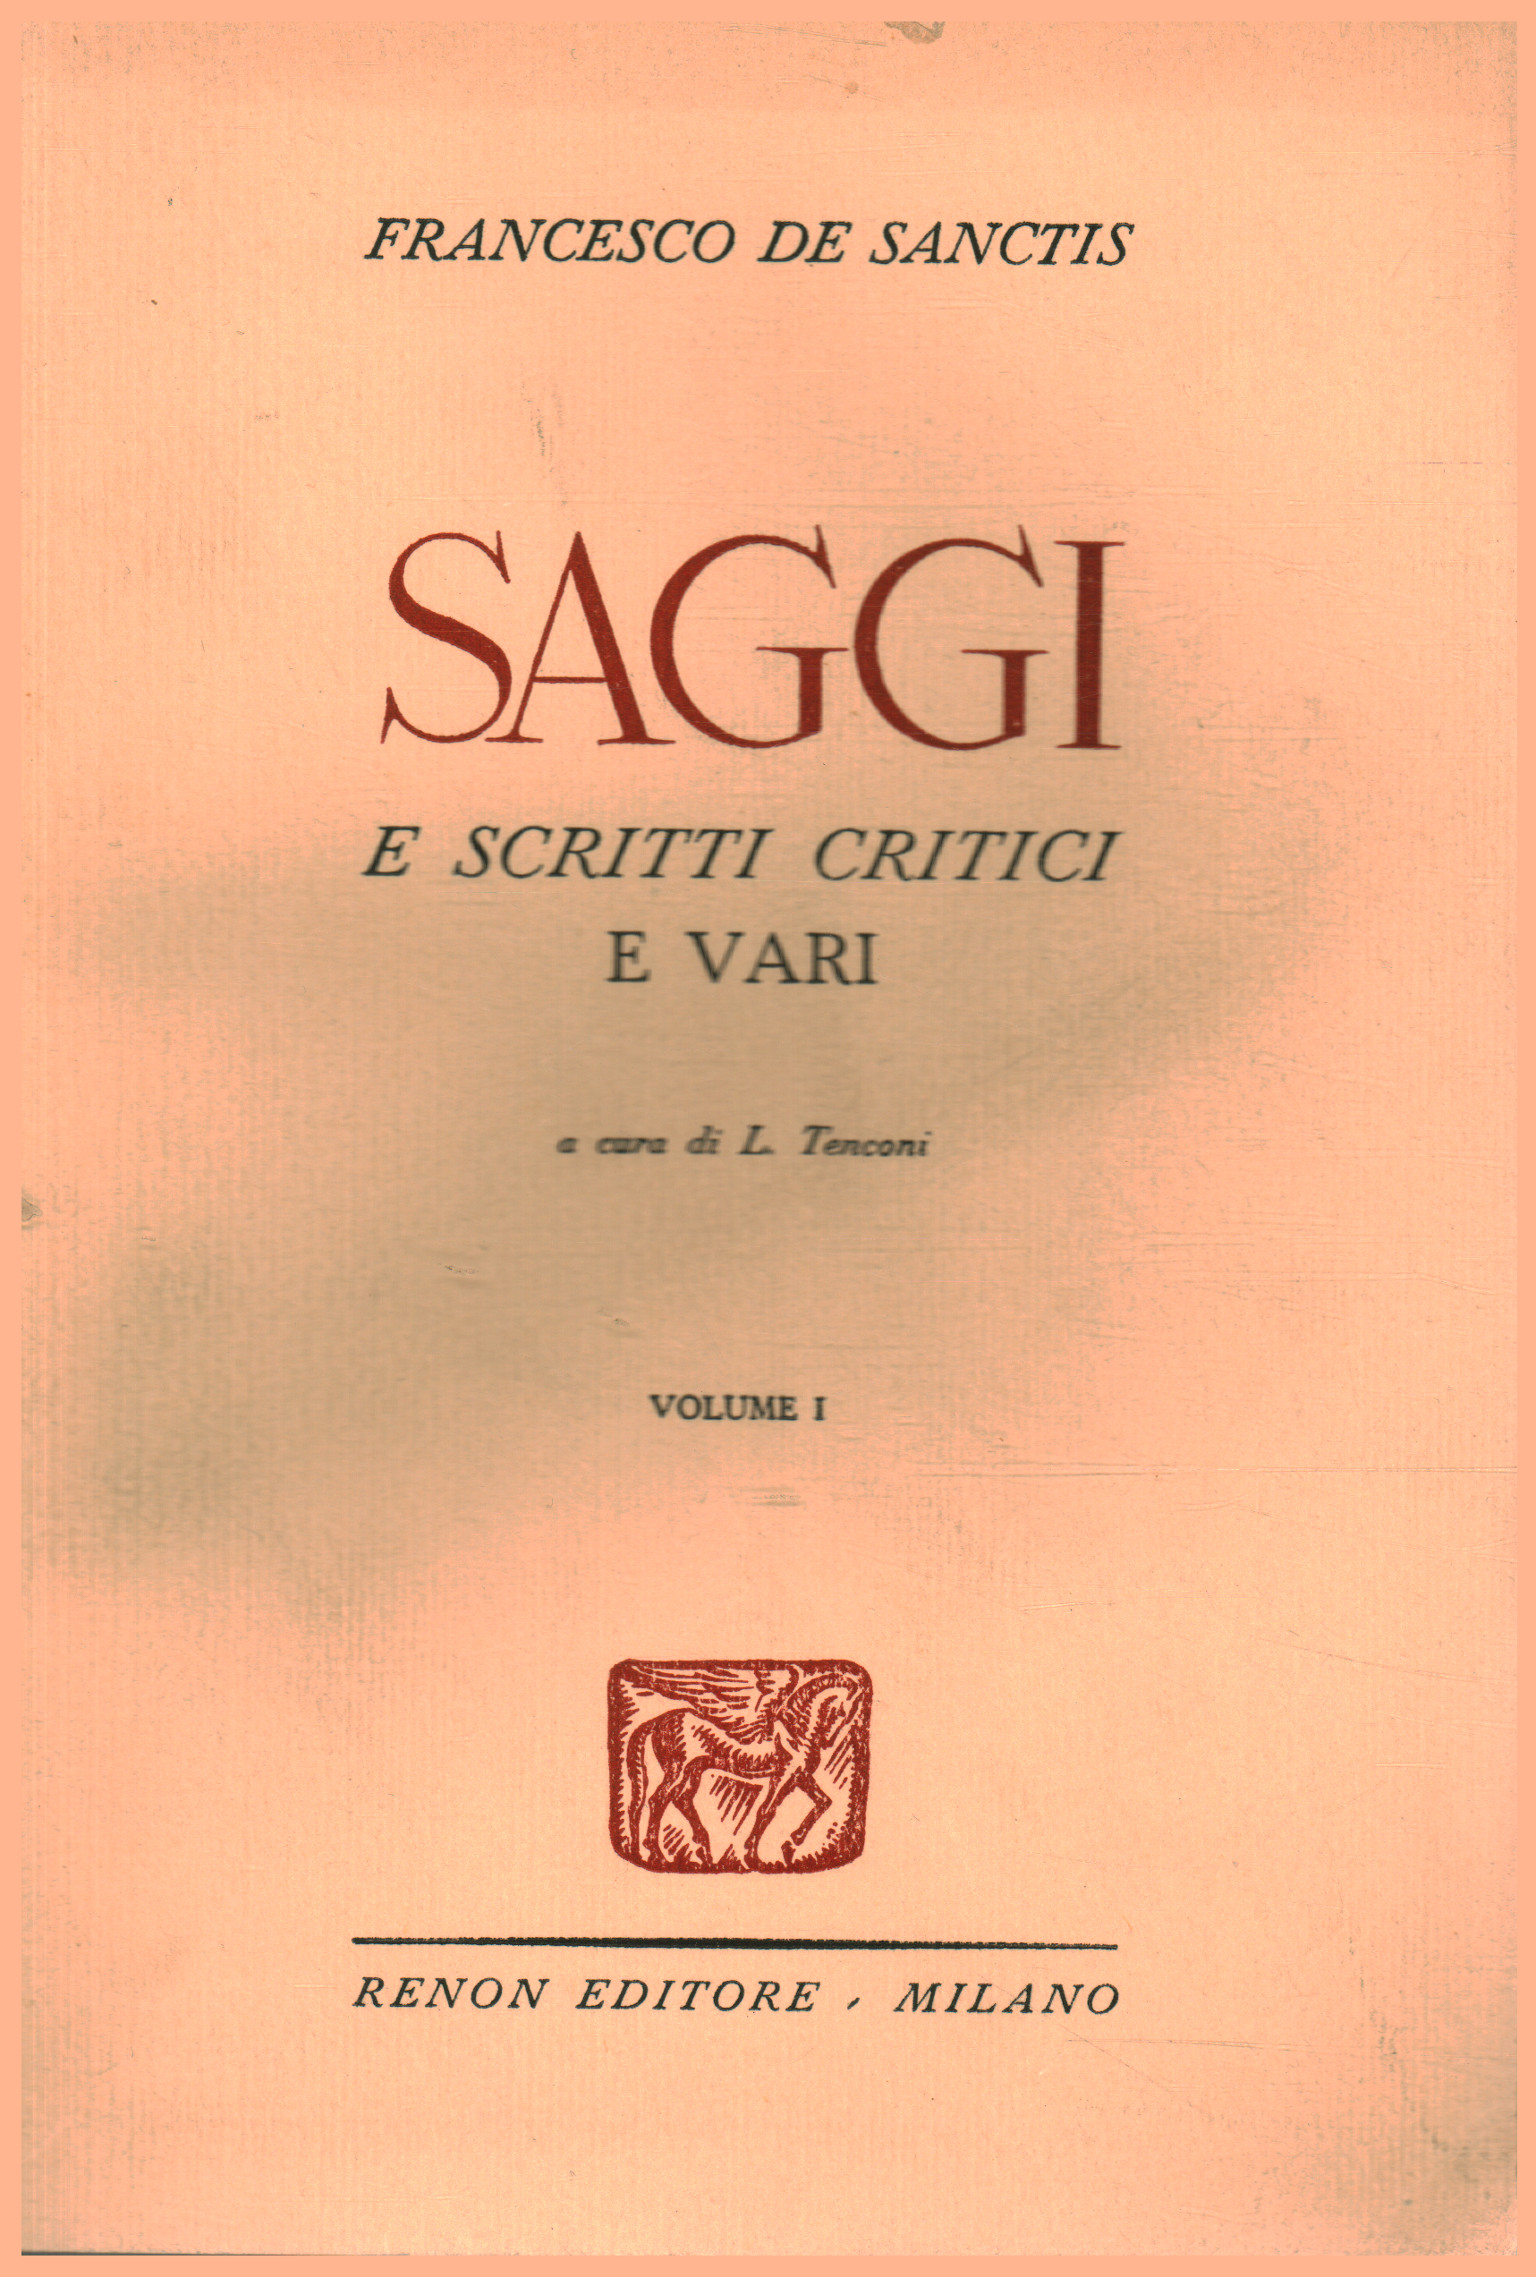 Critical and various essays and writings. Volume one, Francesco De Sanctis